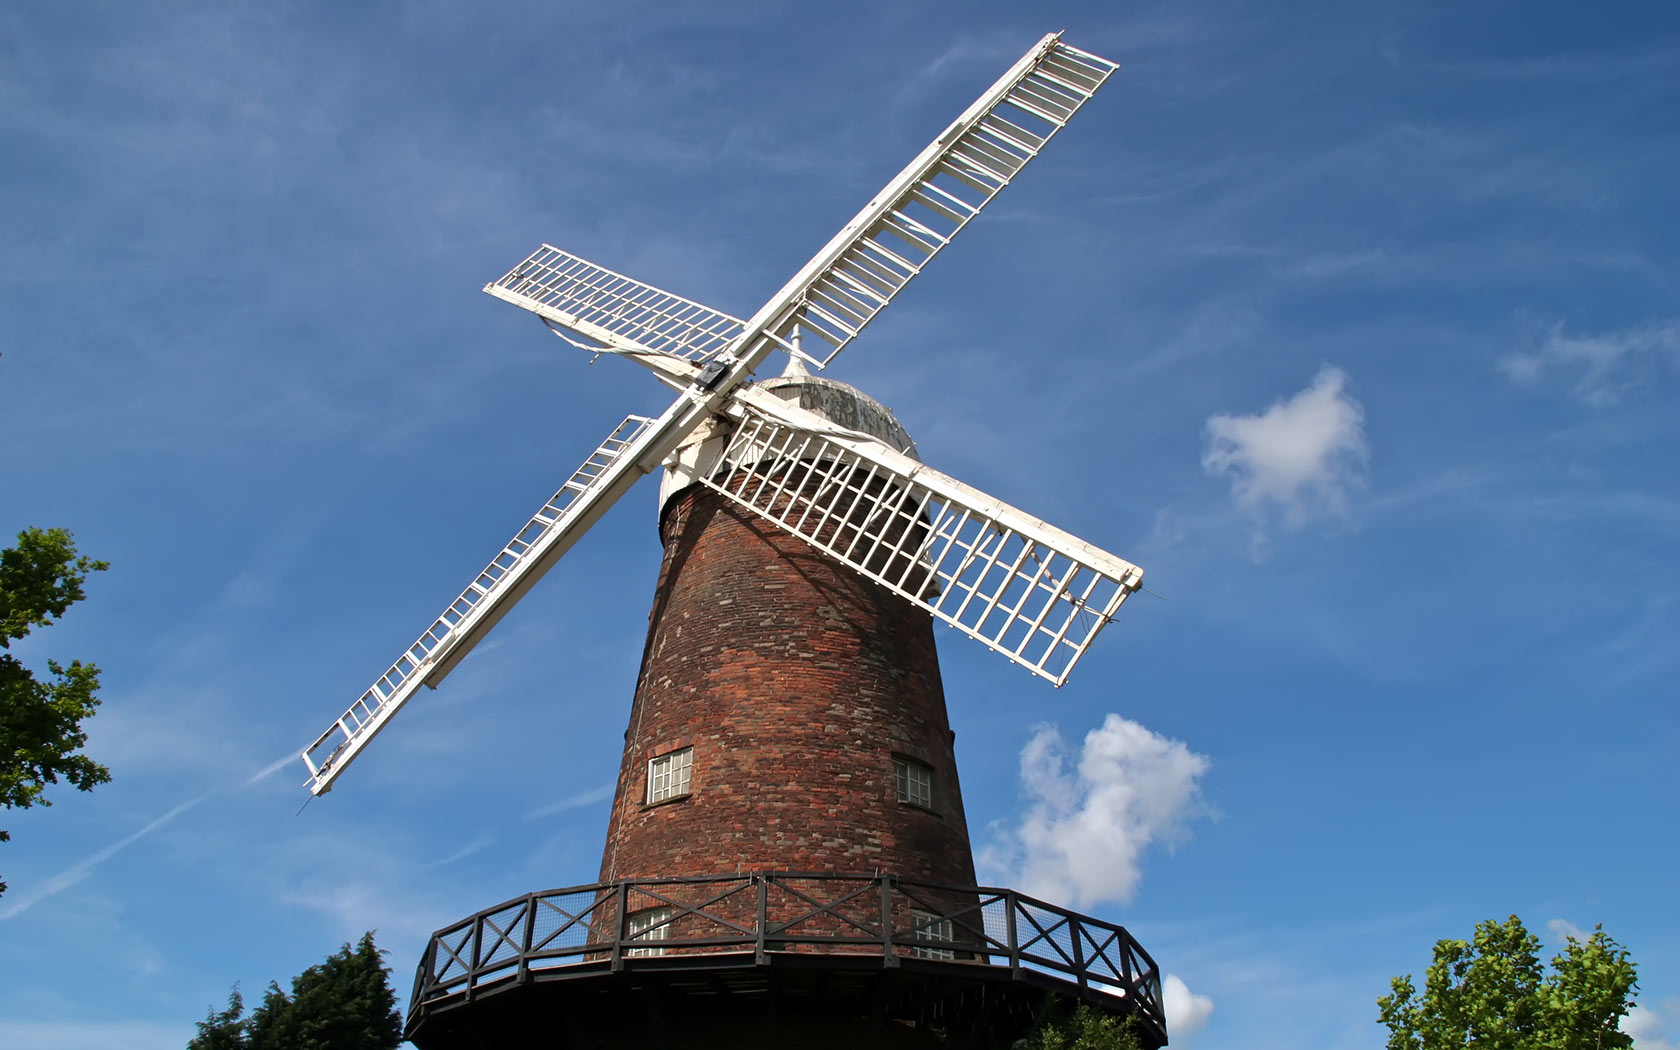 May 9: Windmill Day